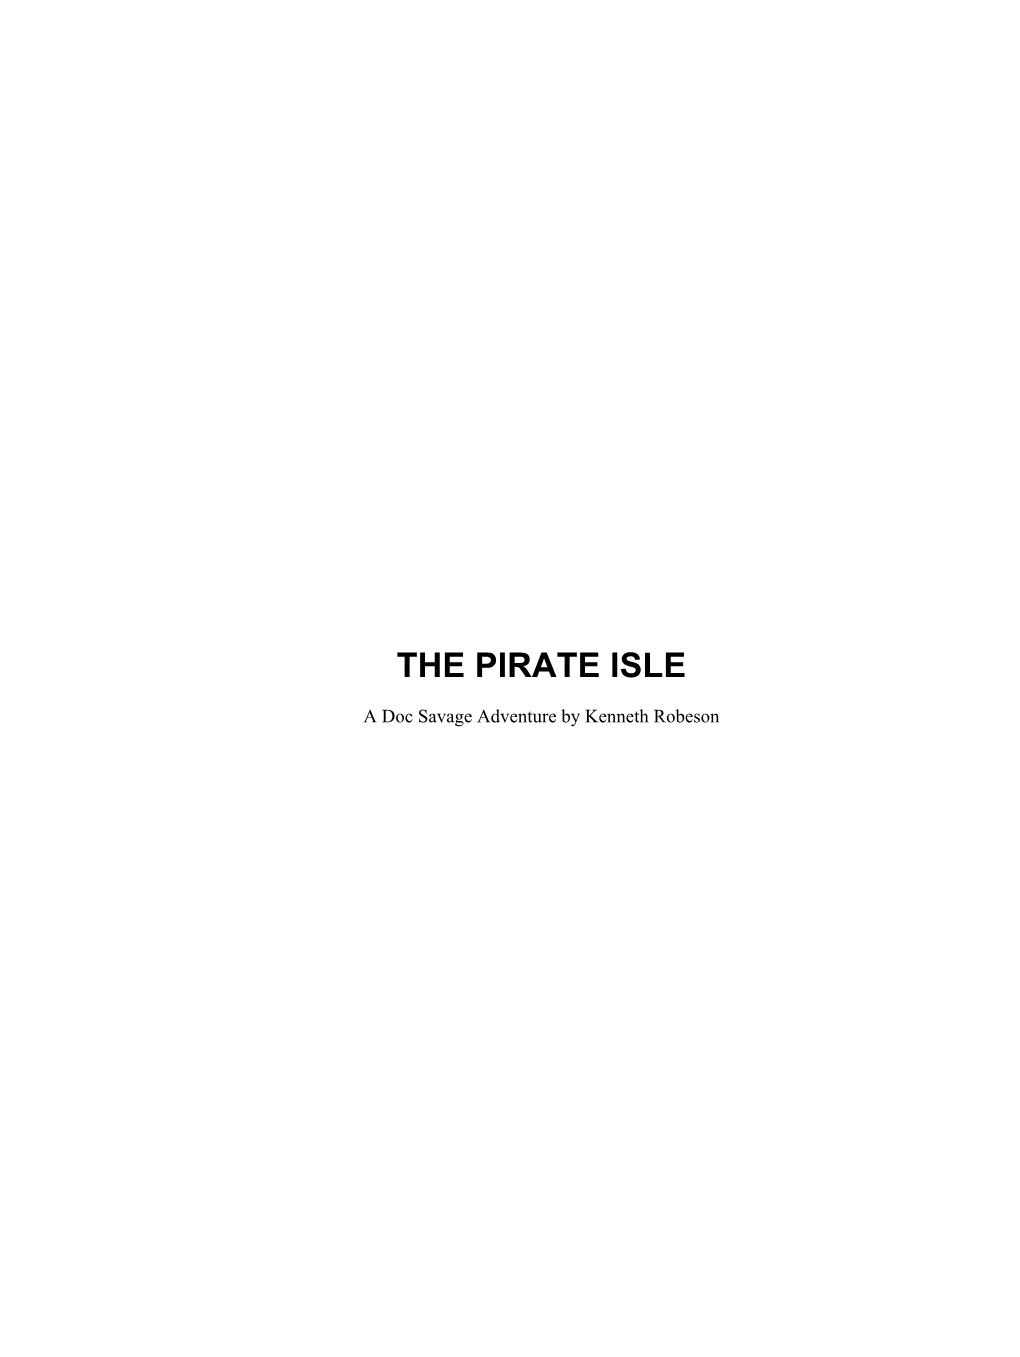 The Pirate Isle